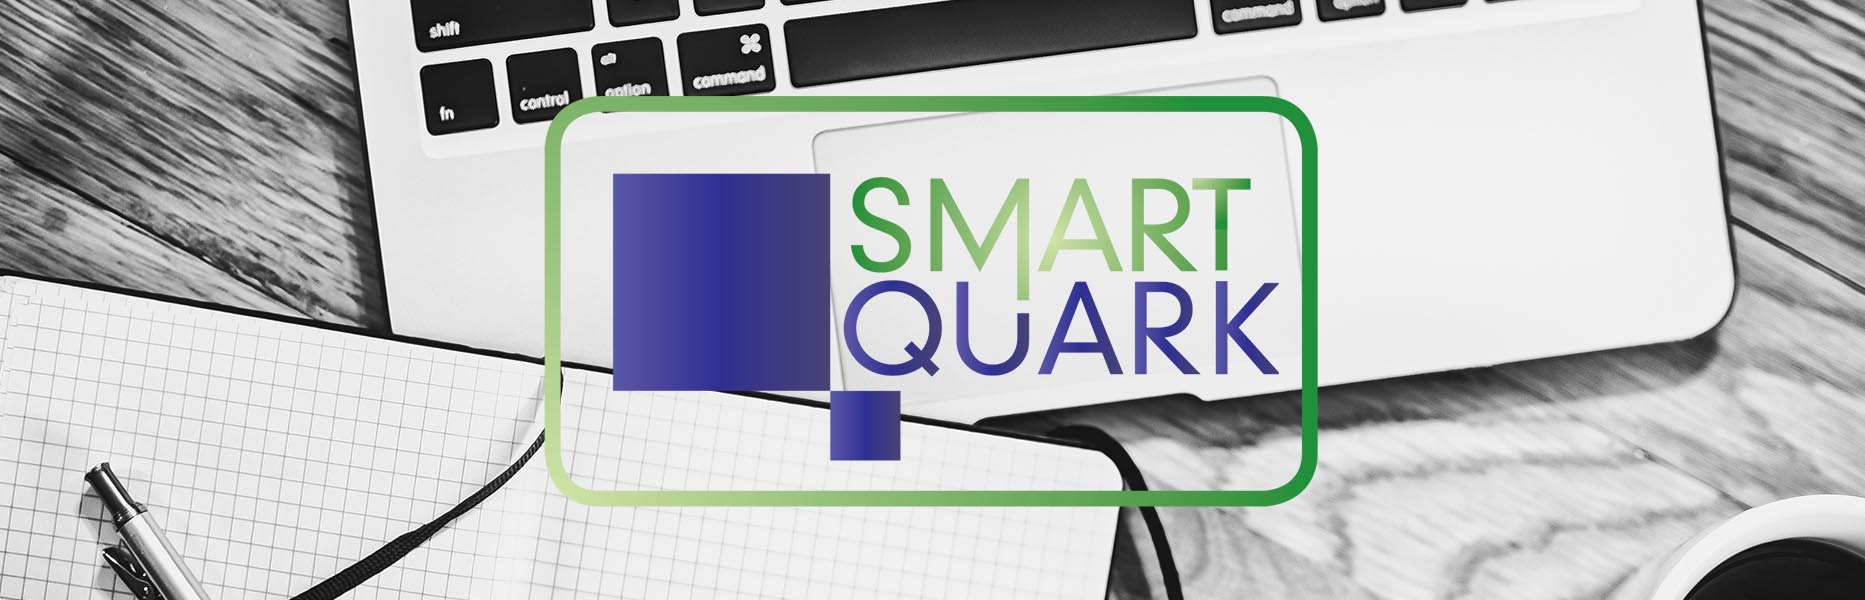 Smart Quark